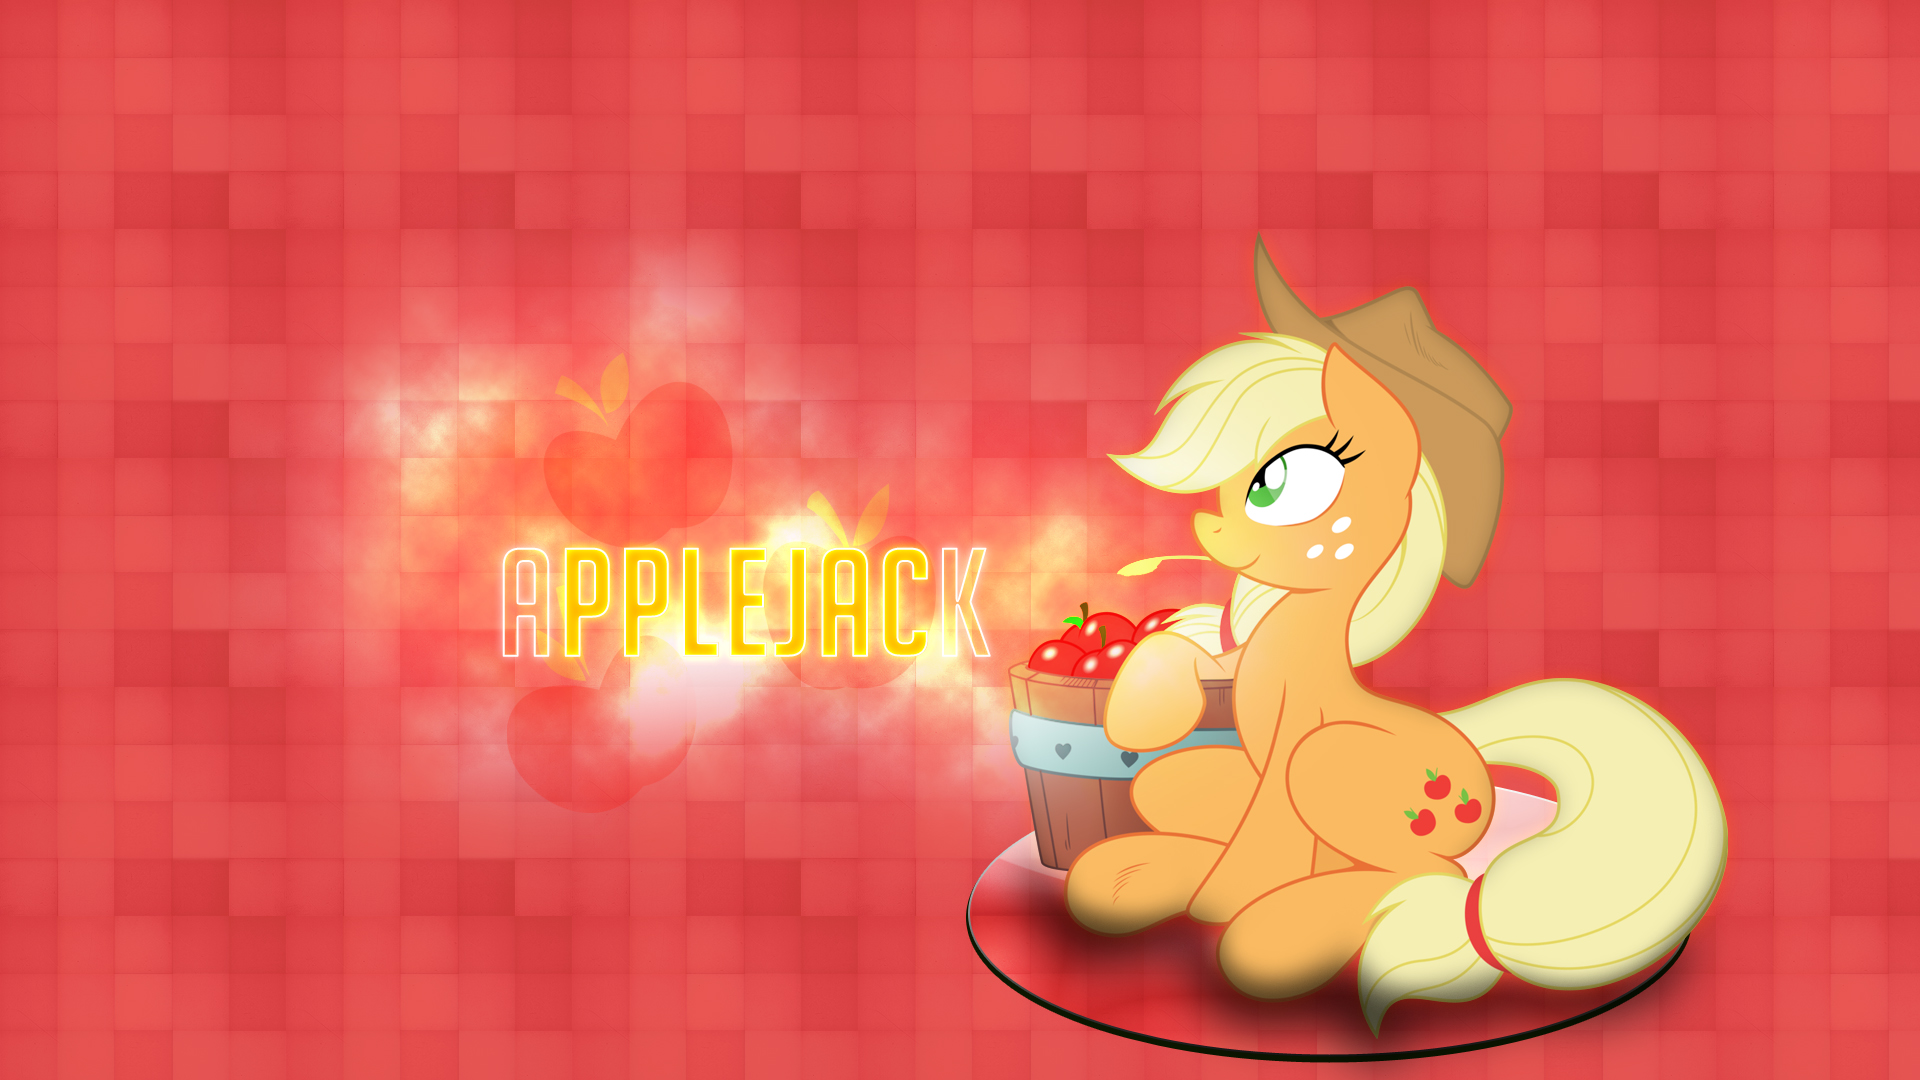 Applejack Wall 02 by Baka-Neku and Omega-Style